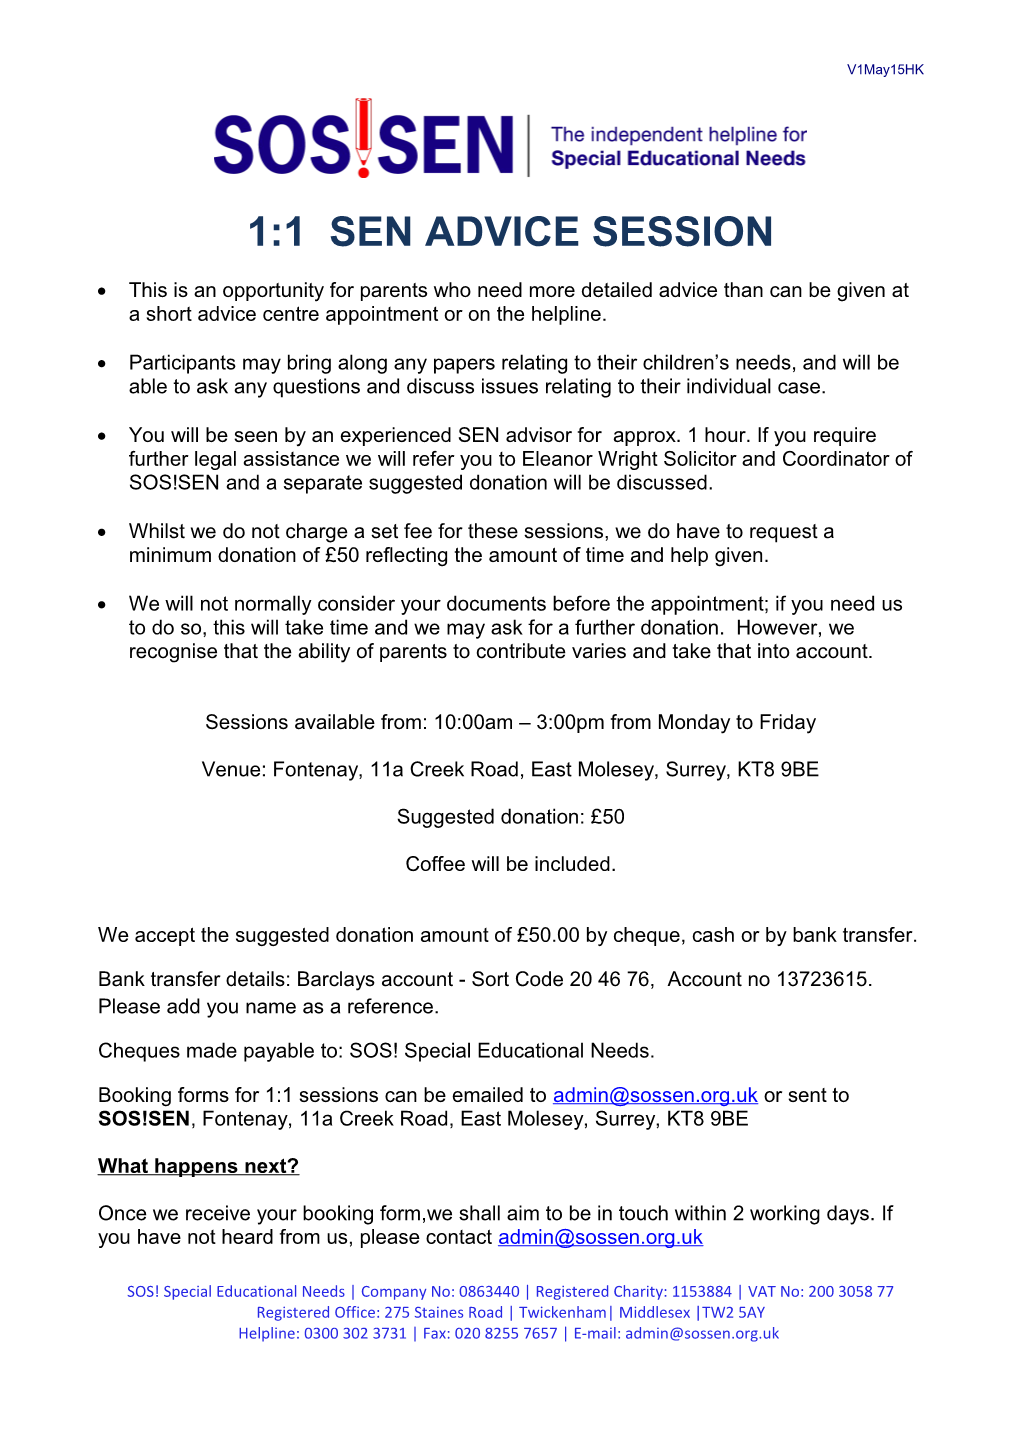 1:1 Sen Advice Session